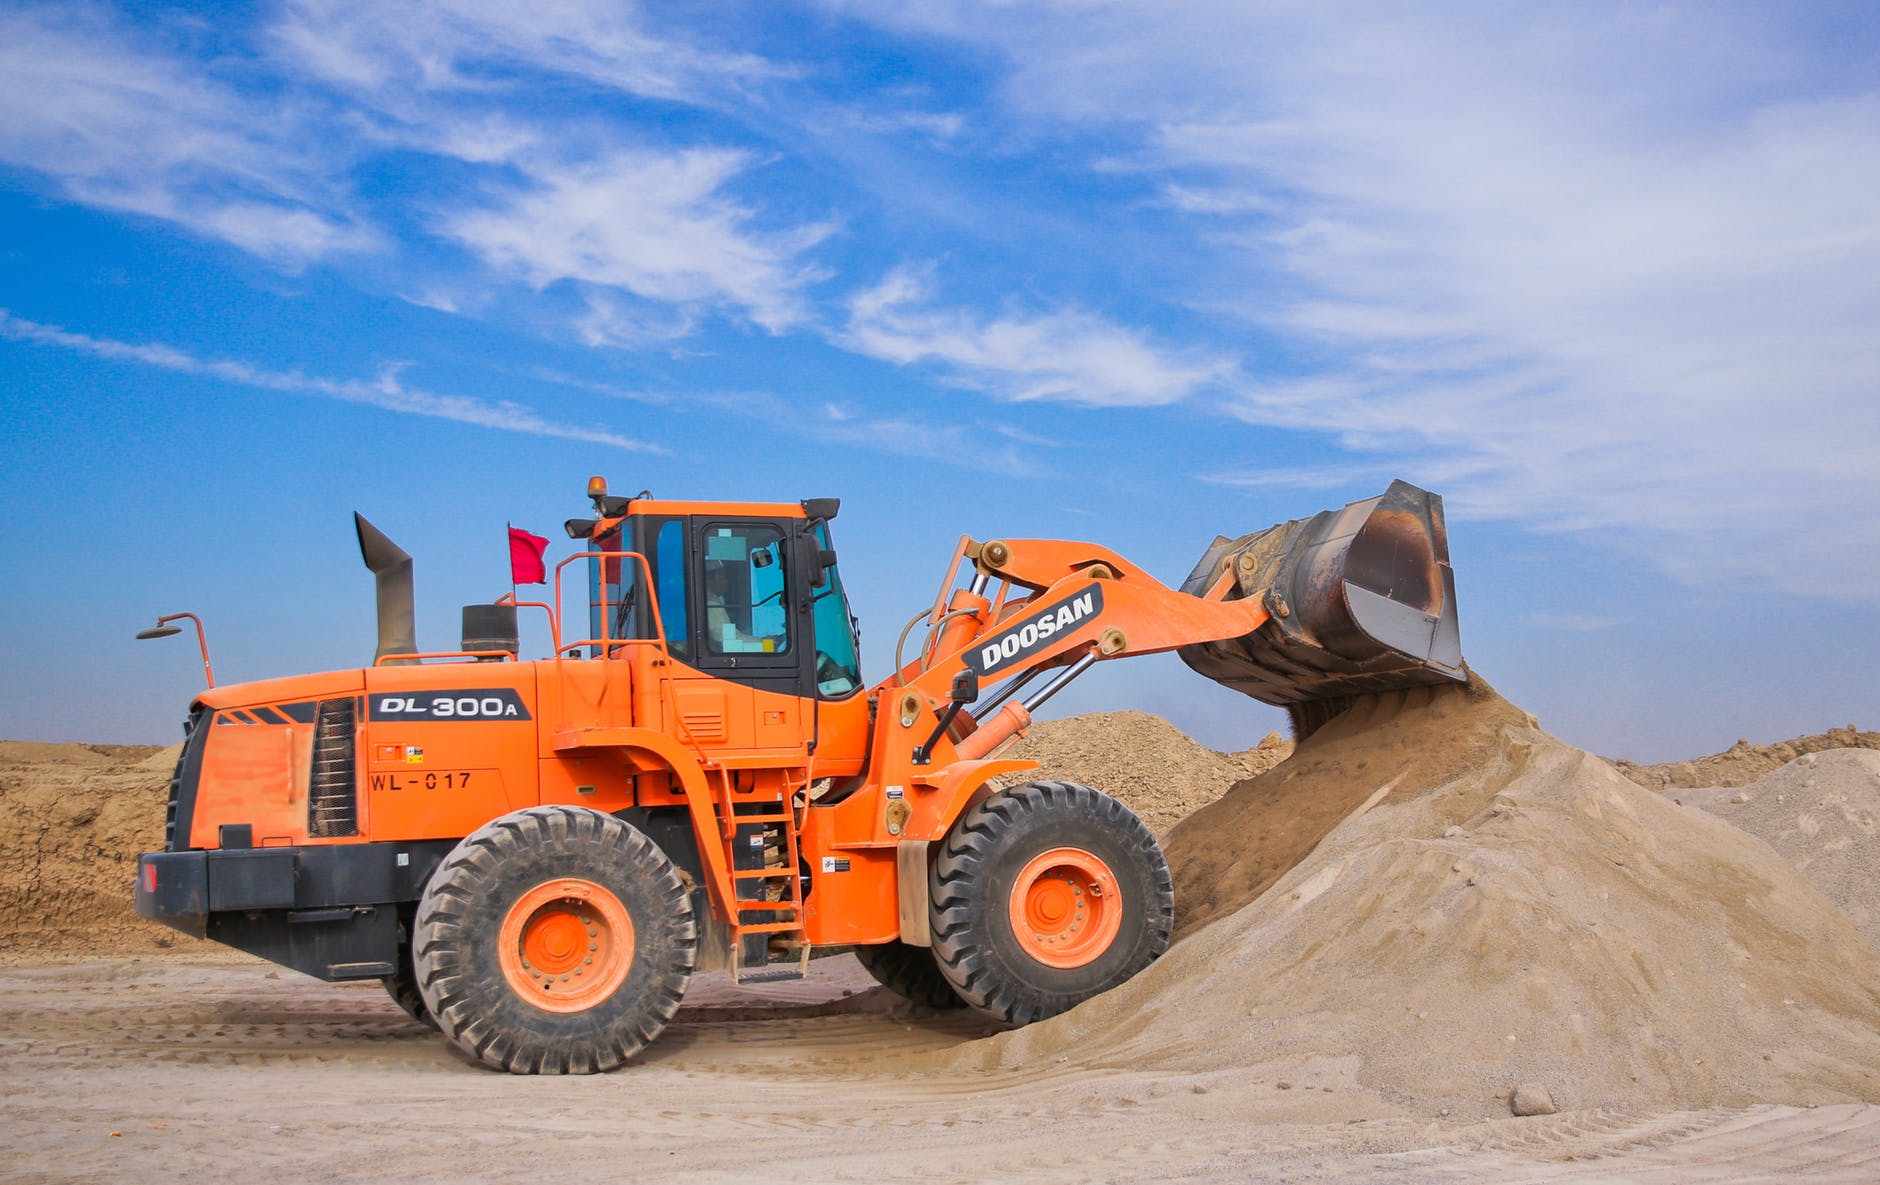 Buying Used Excavators in Dubai - Inspection tips